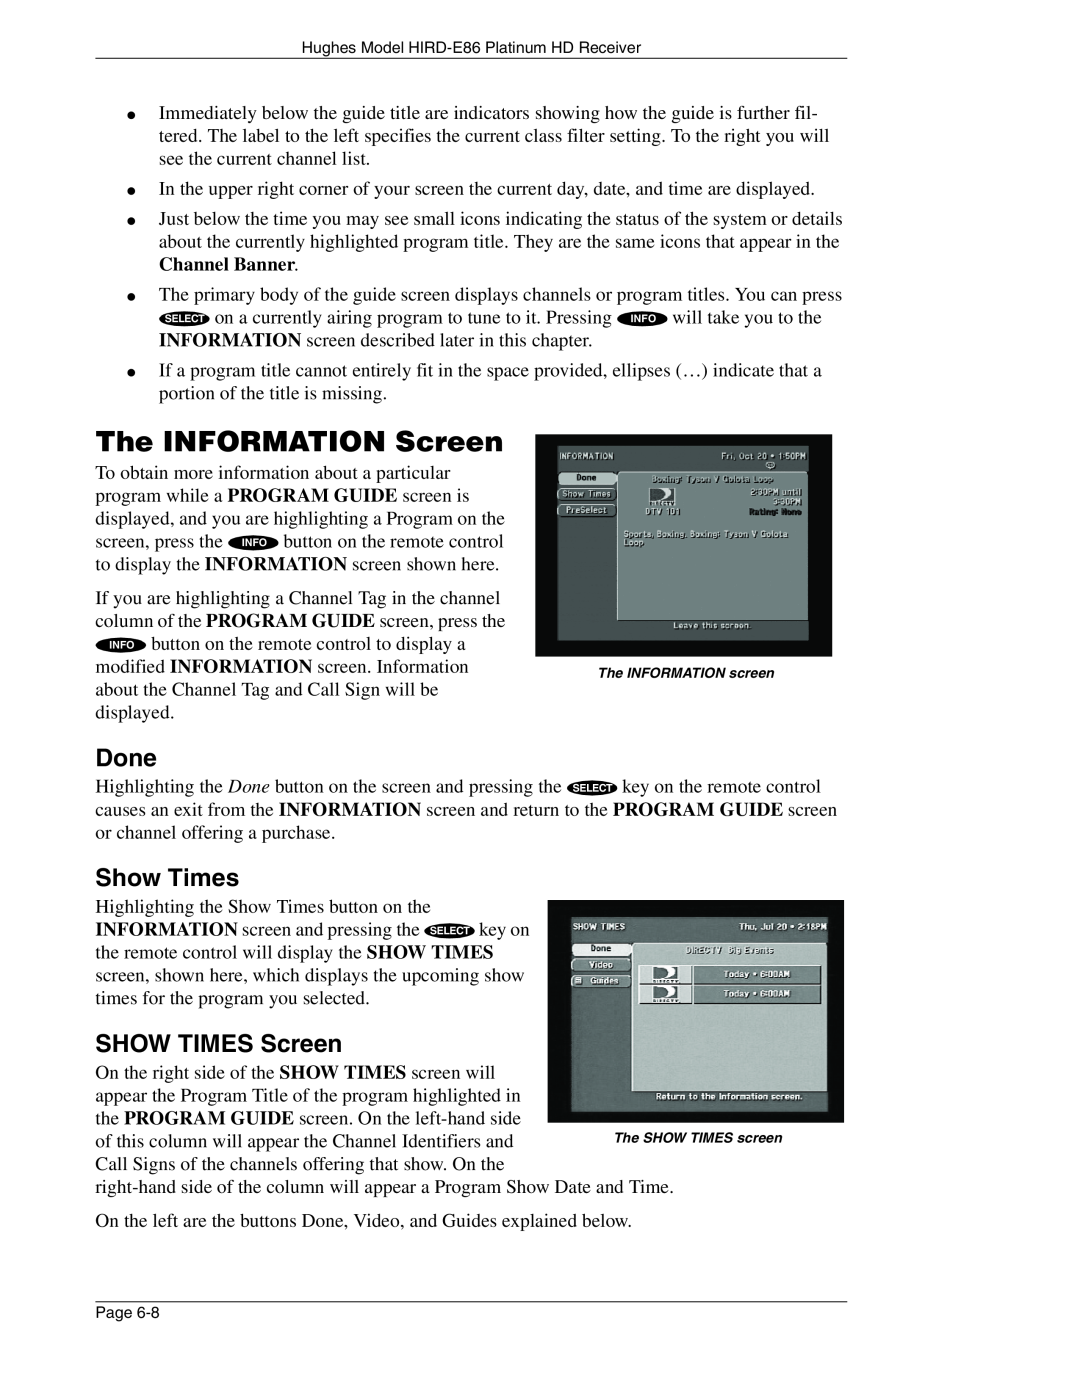 DirecTV HIRD-E86 manual The INFORMATION Screen, Done, Show Times, SHOW TIMES Screen 